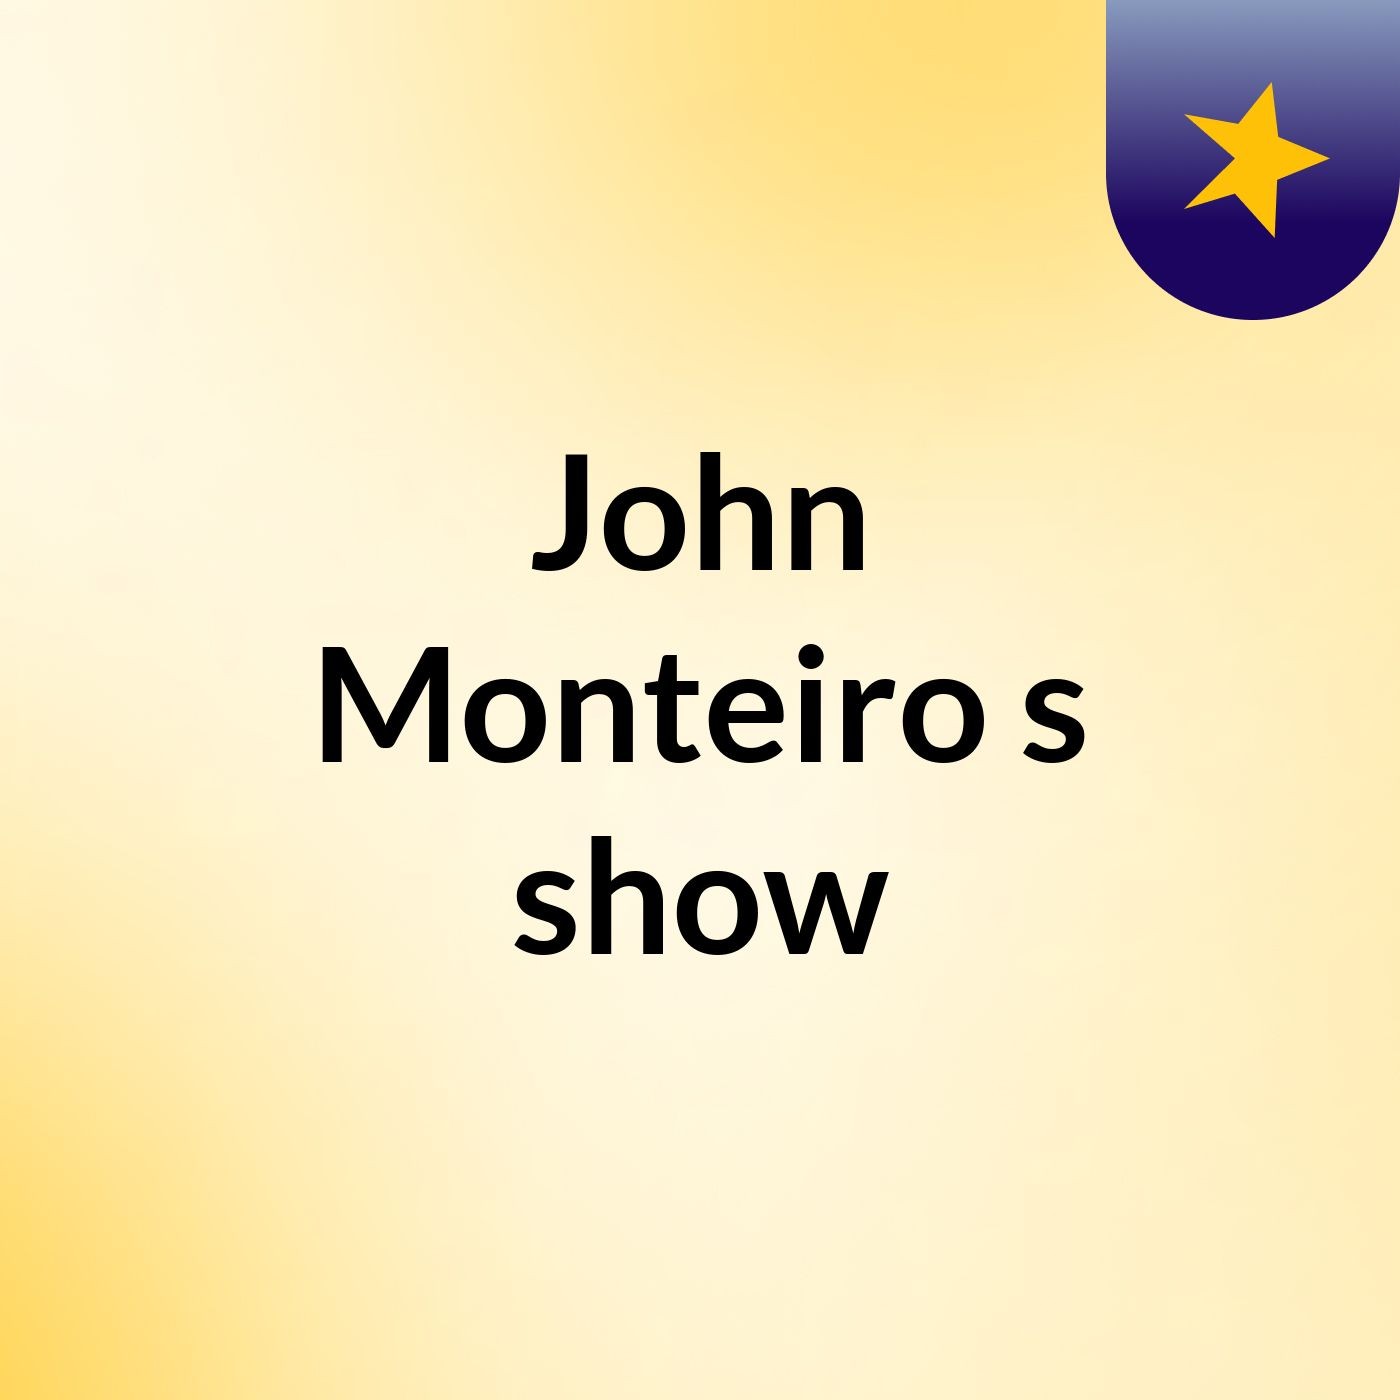 John Monteiro's show